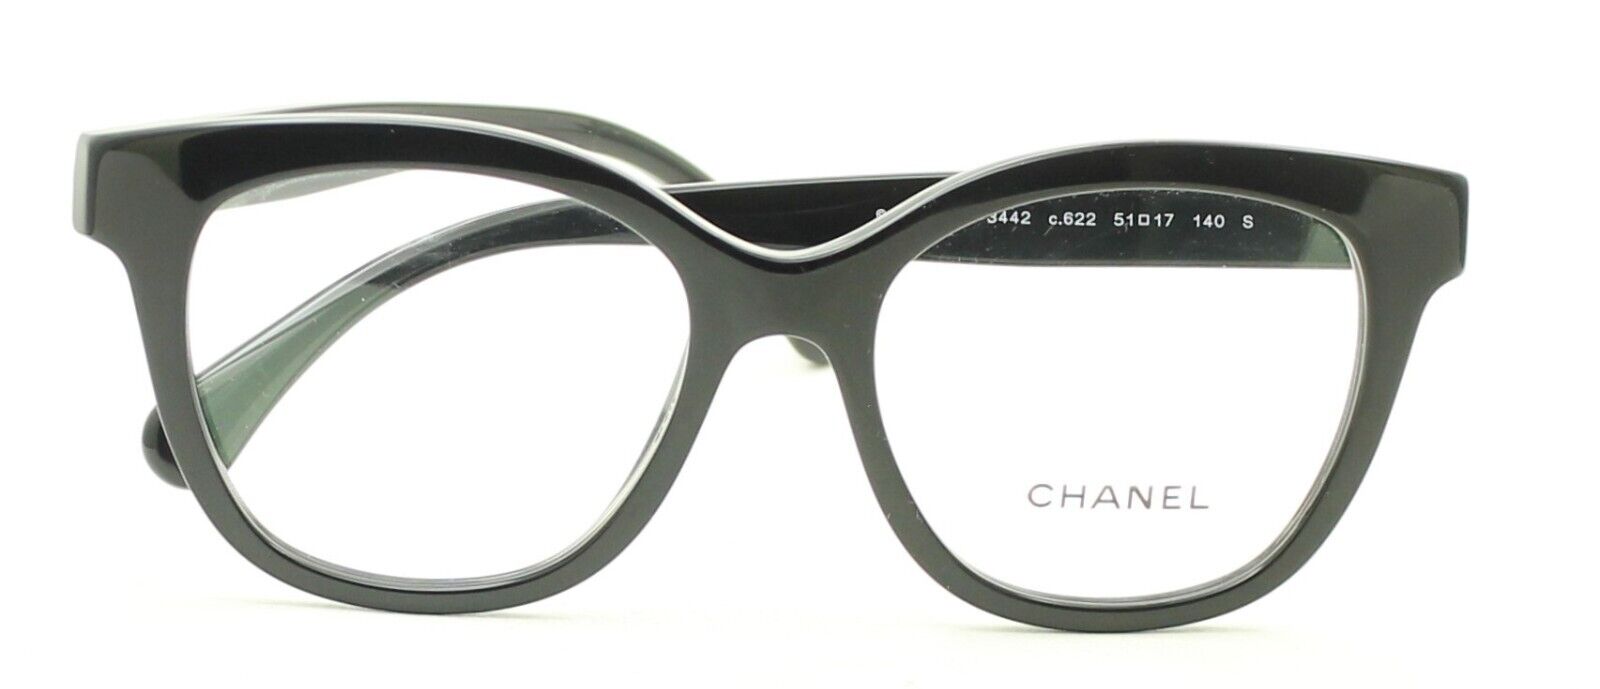 CHANEL 3442 622 51mm Eyewear FRAMES Eyeglasses RX Optical Glasses - New  Italy - GGV Eyewear